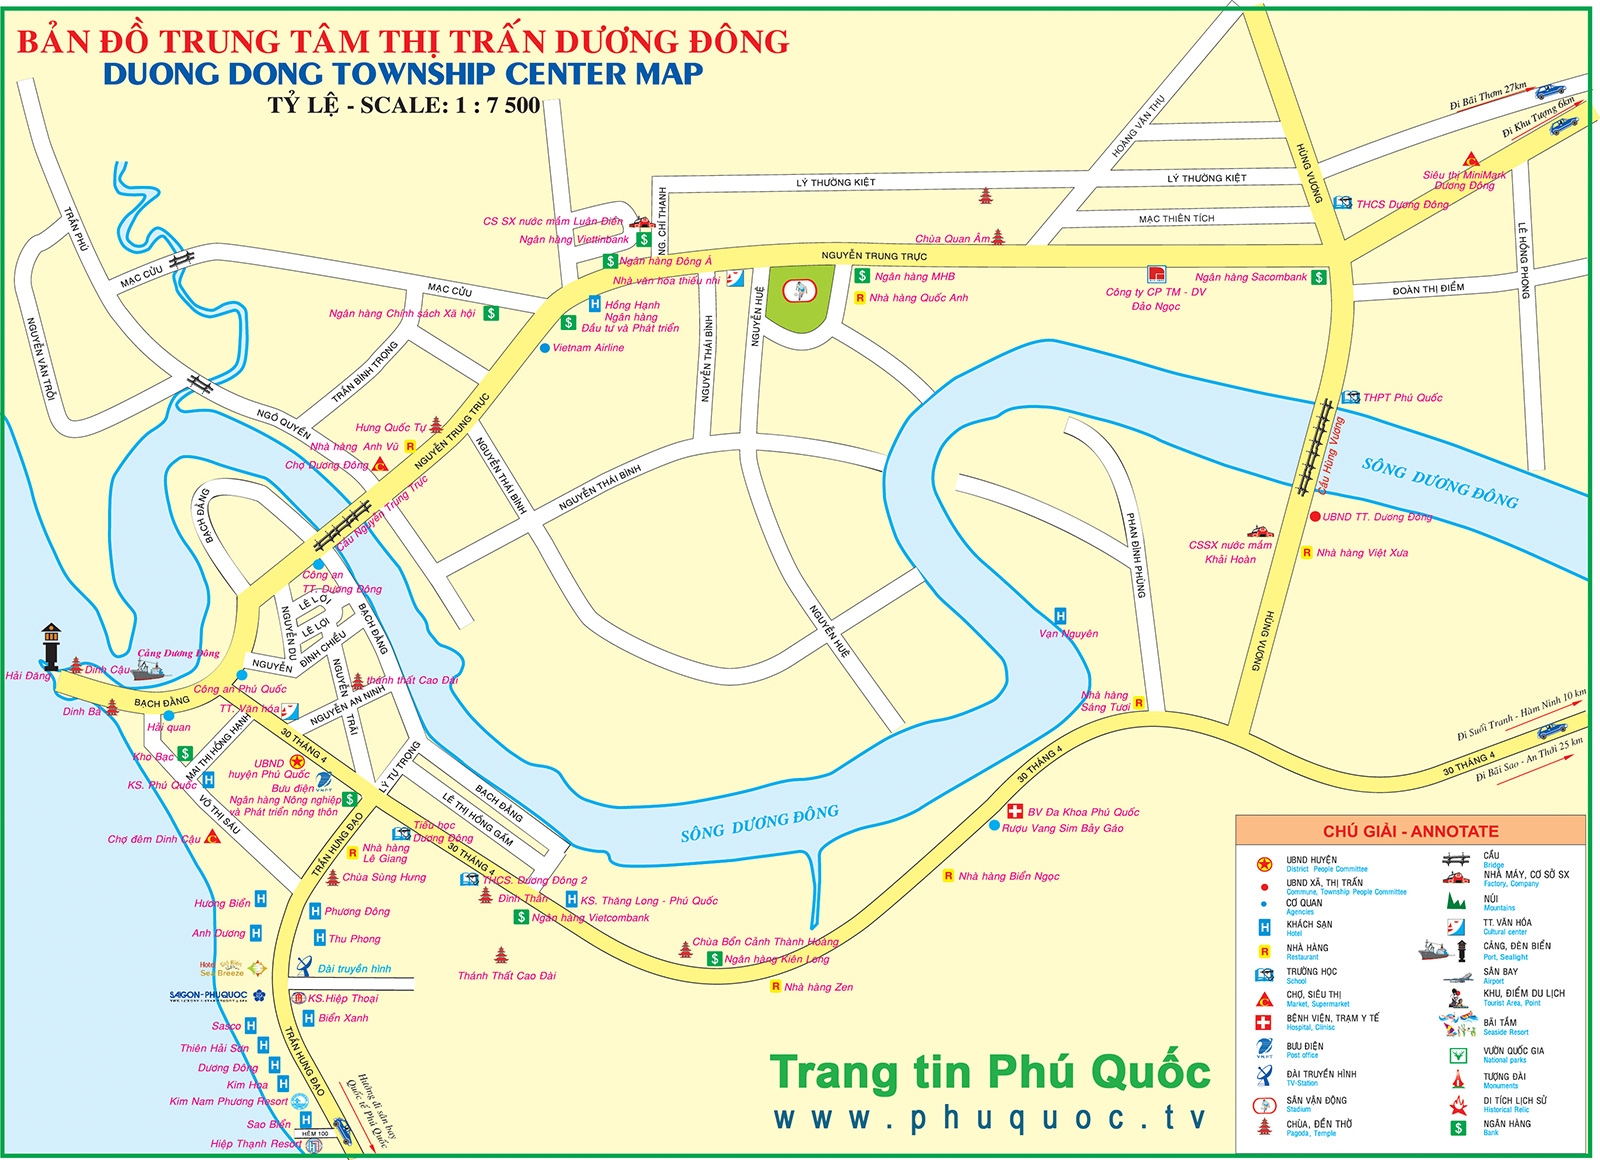 phu quoc tourism map